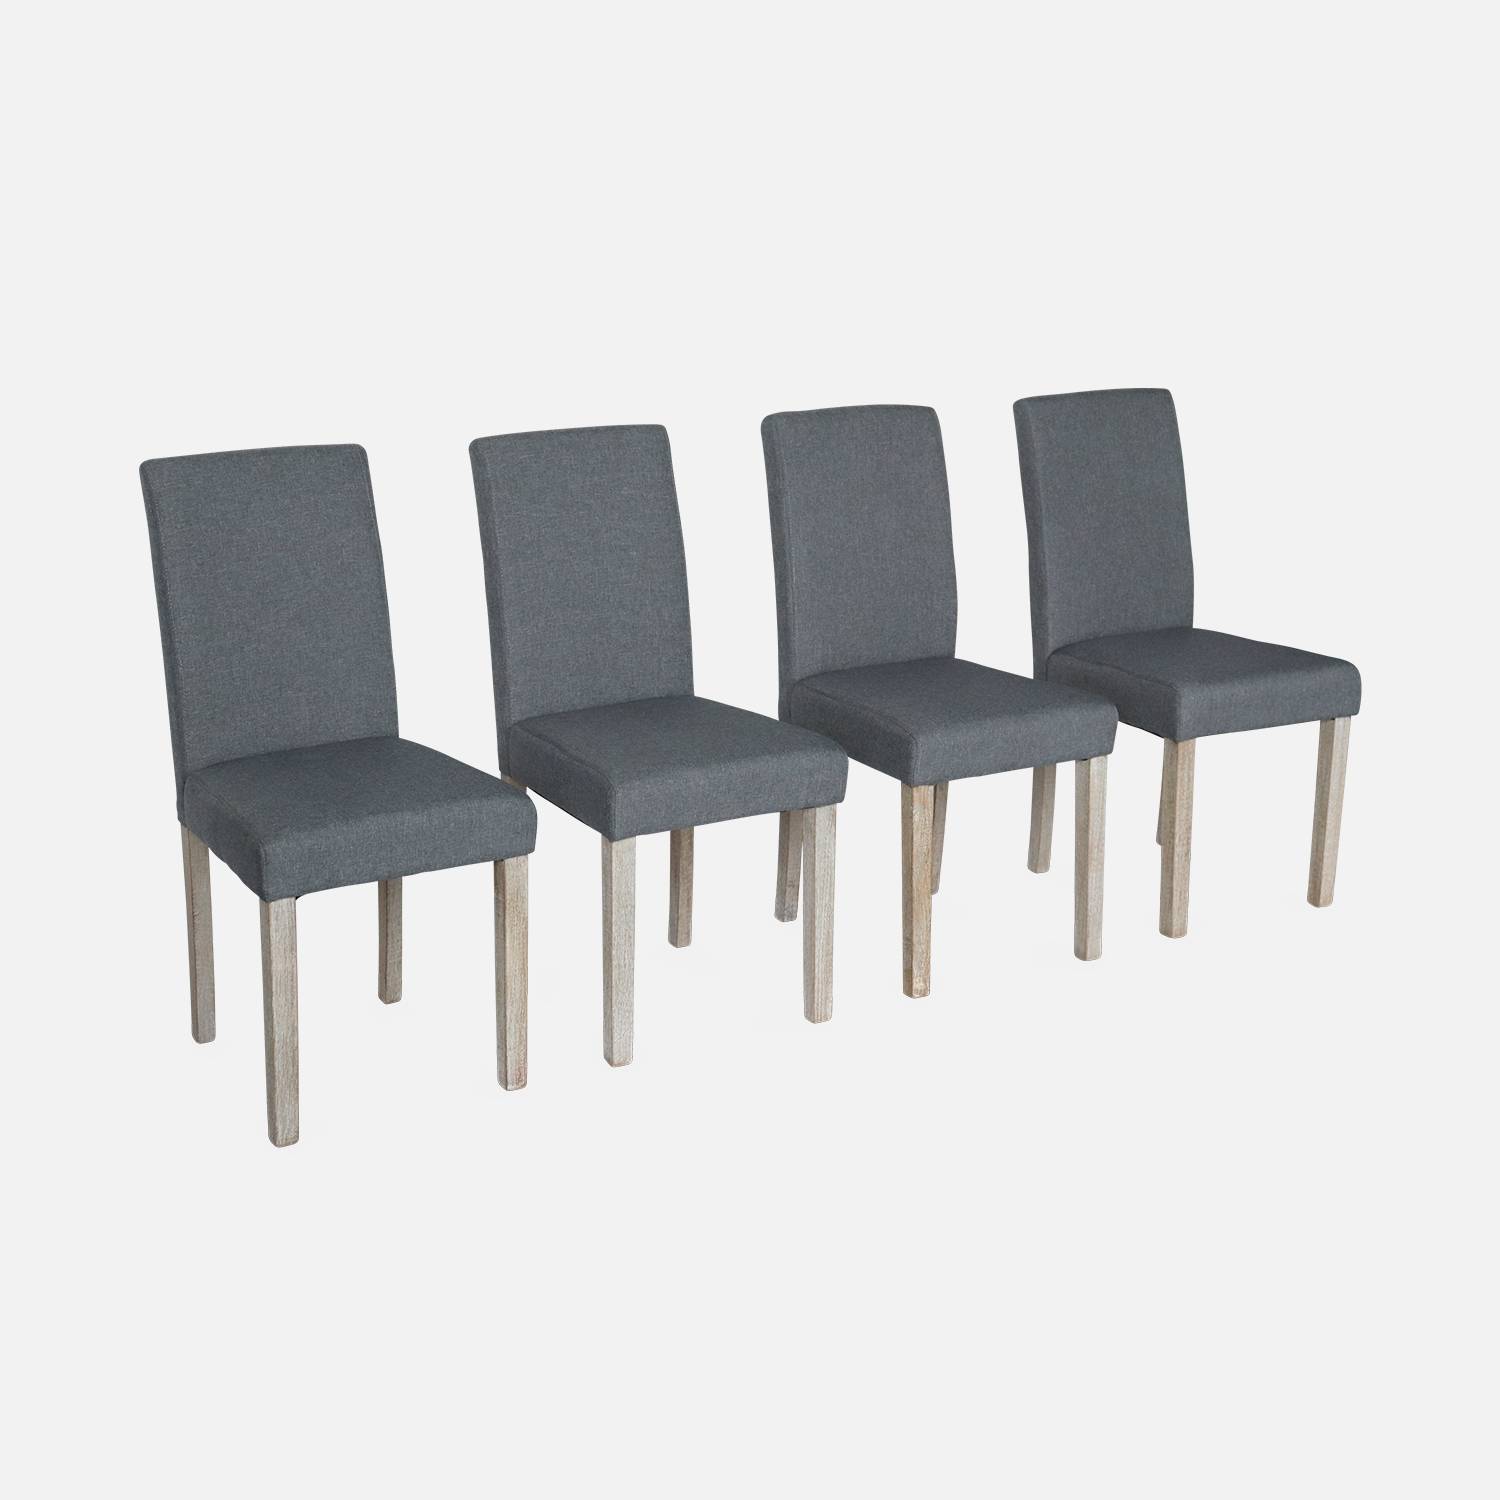 Set di 4 sedie - Rita - sedie in tessuto, gambe in legno ceruleo, grigio scuro Photo3